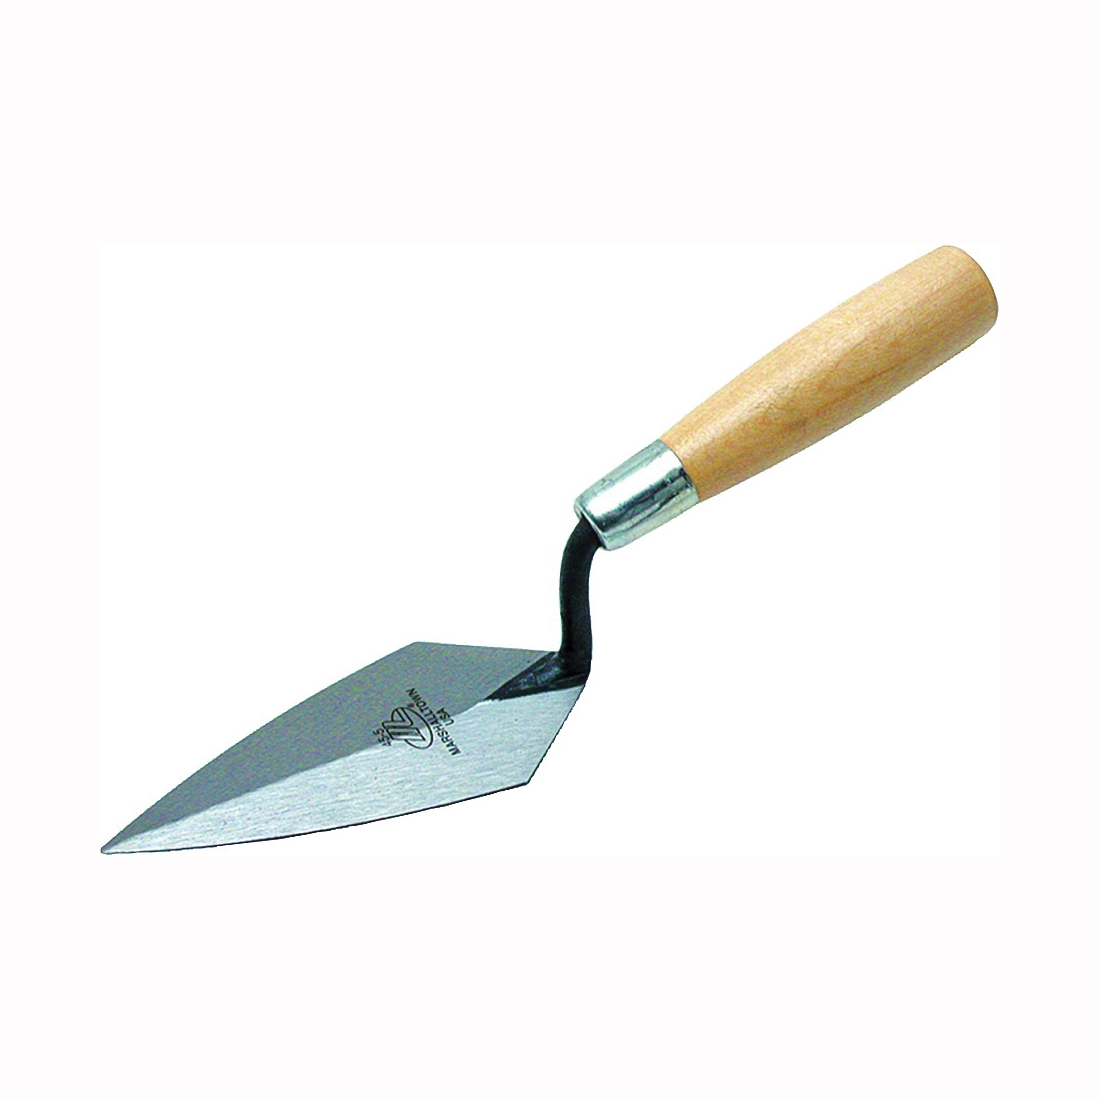 45 5 Pointing Trowel, 5 in L Blade, 2-1/4 in W Blade, HCS Blade, Hardwood Handle